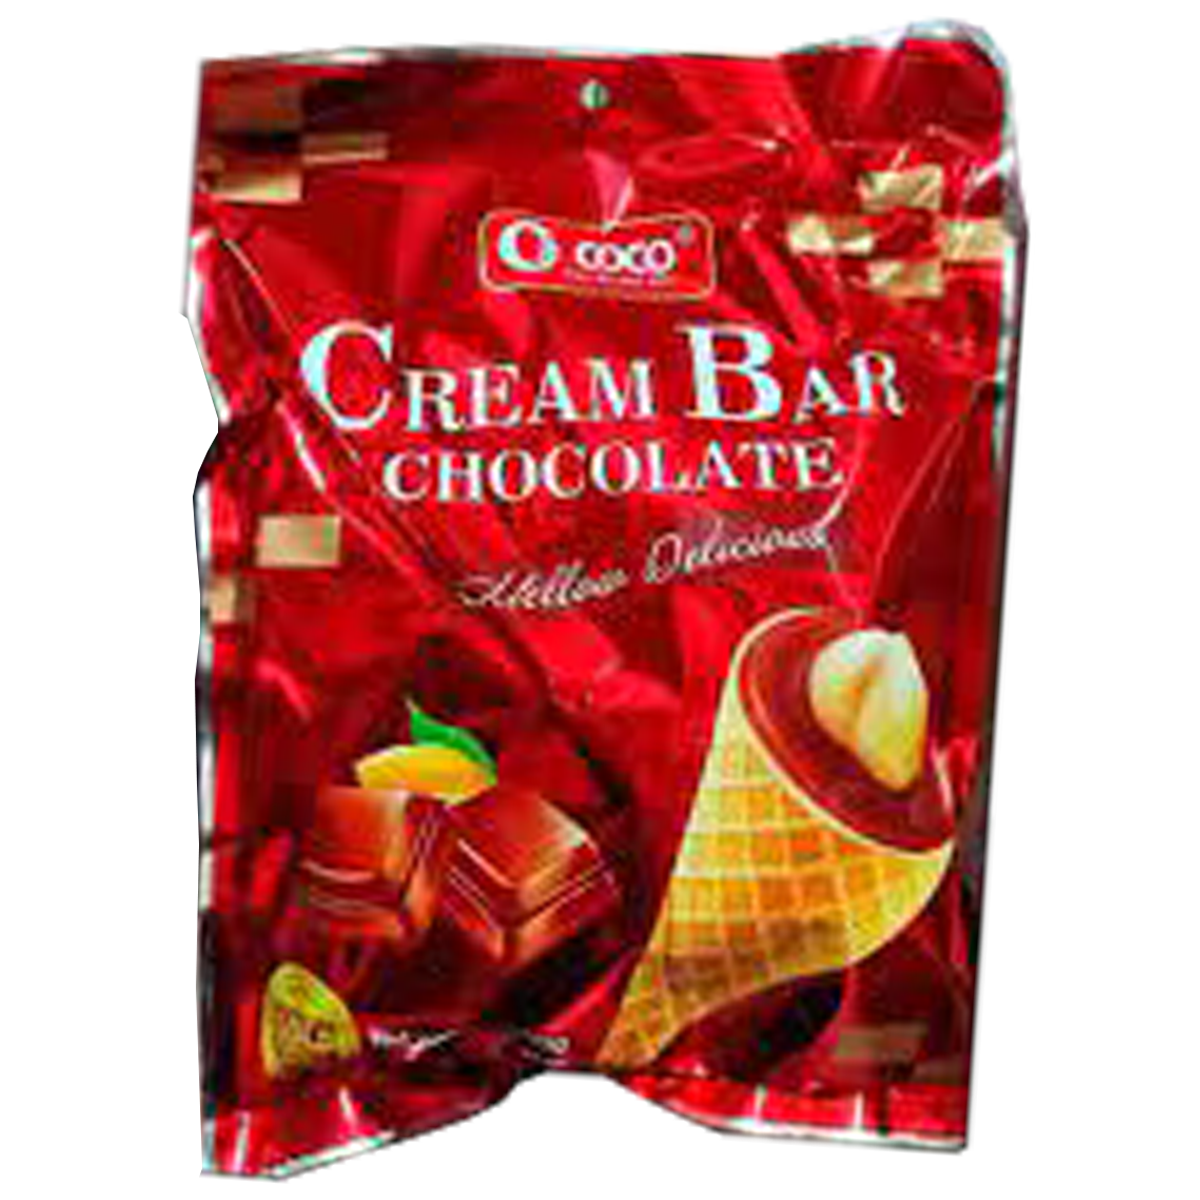 COCO Creambar Chocolate 28 pieces, 300grams